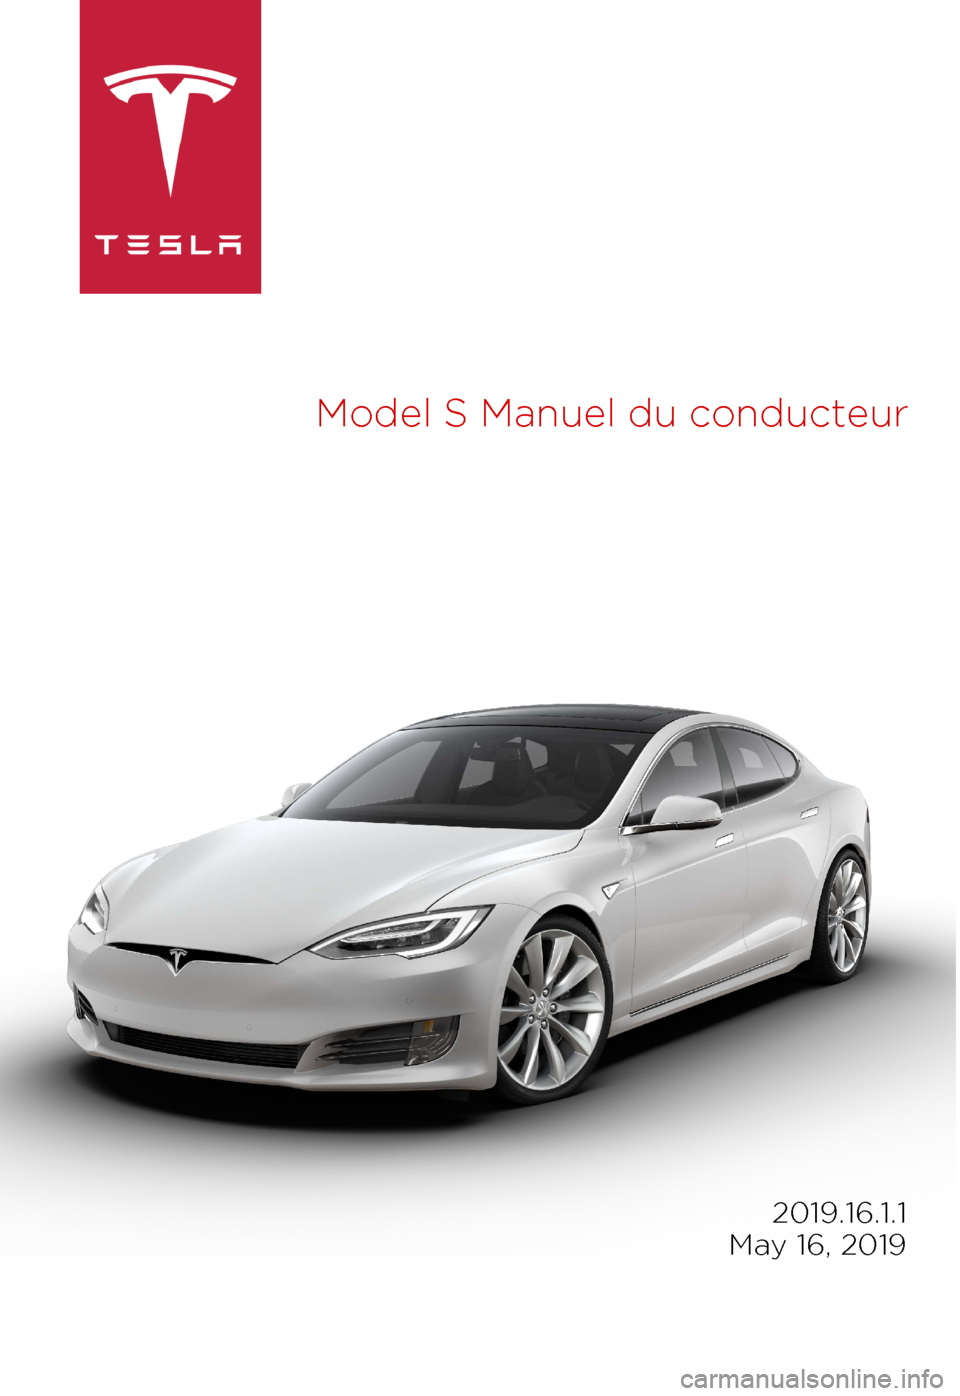 TESLA MODEL S 2019  Manuel du propriétaire (in French)  Model 
S Manuel du conducteur 2019.16.1.1
 
May 16, 2019 